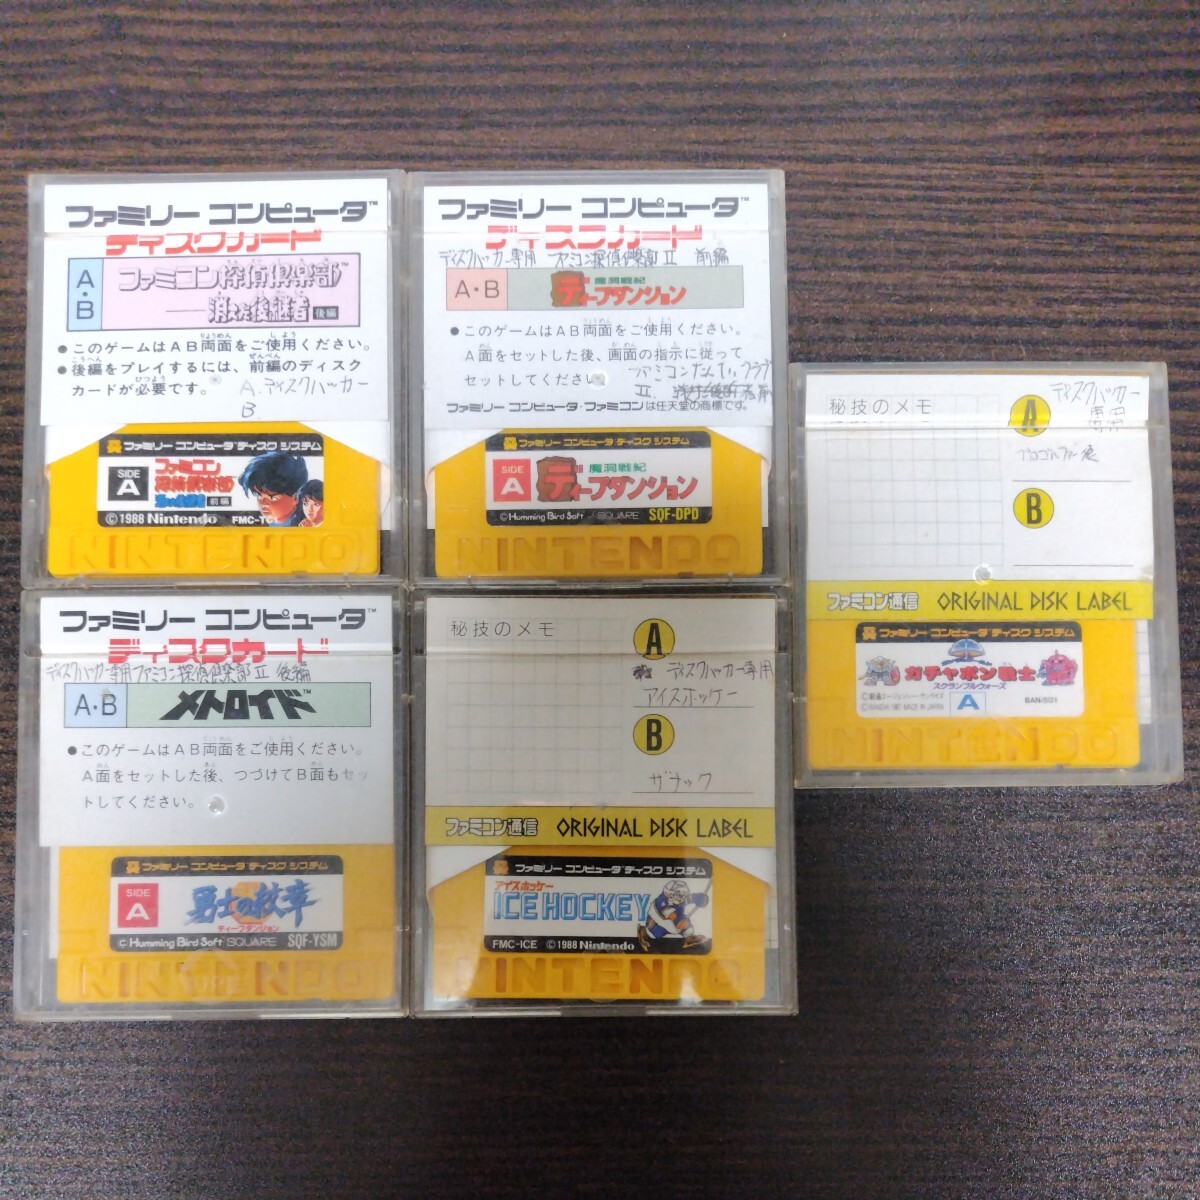 * Famicom disk system disk card 5 pieces set *